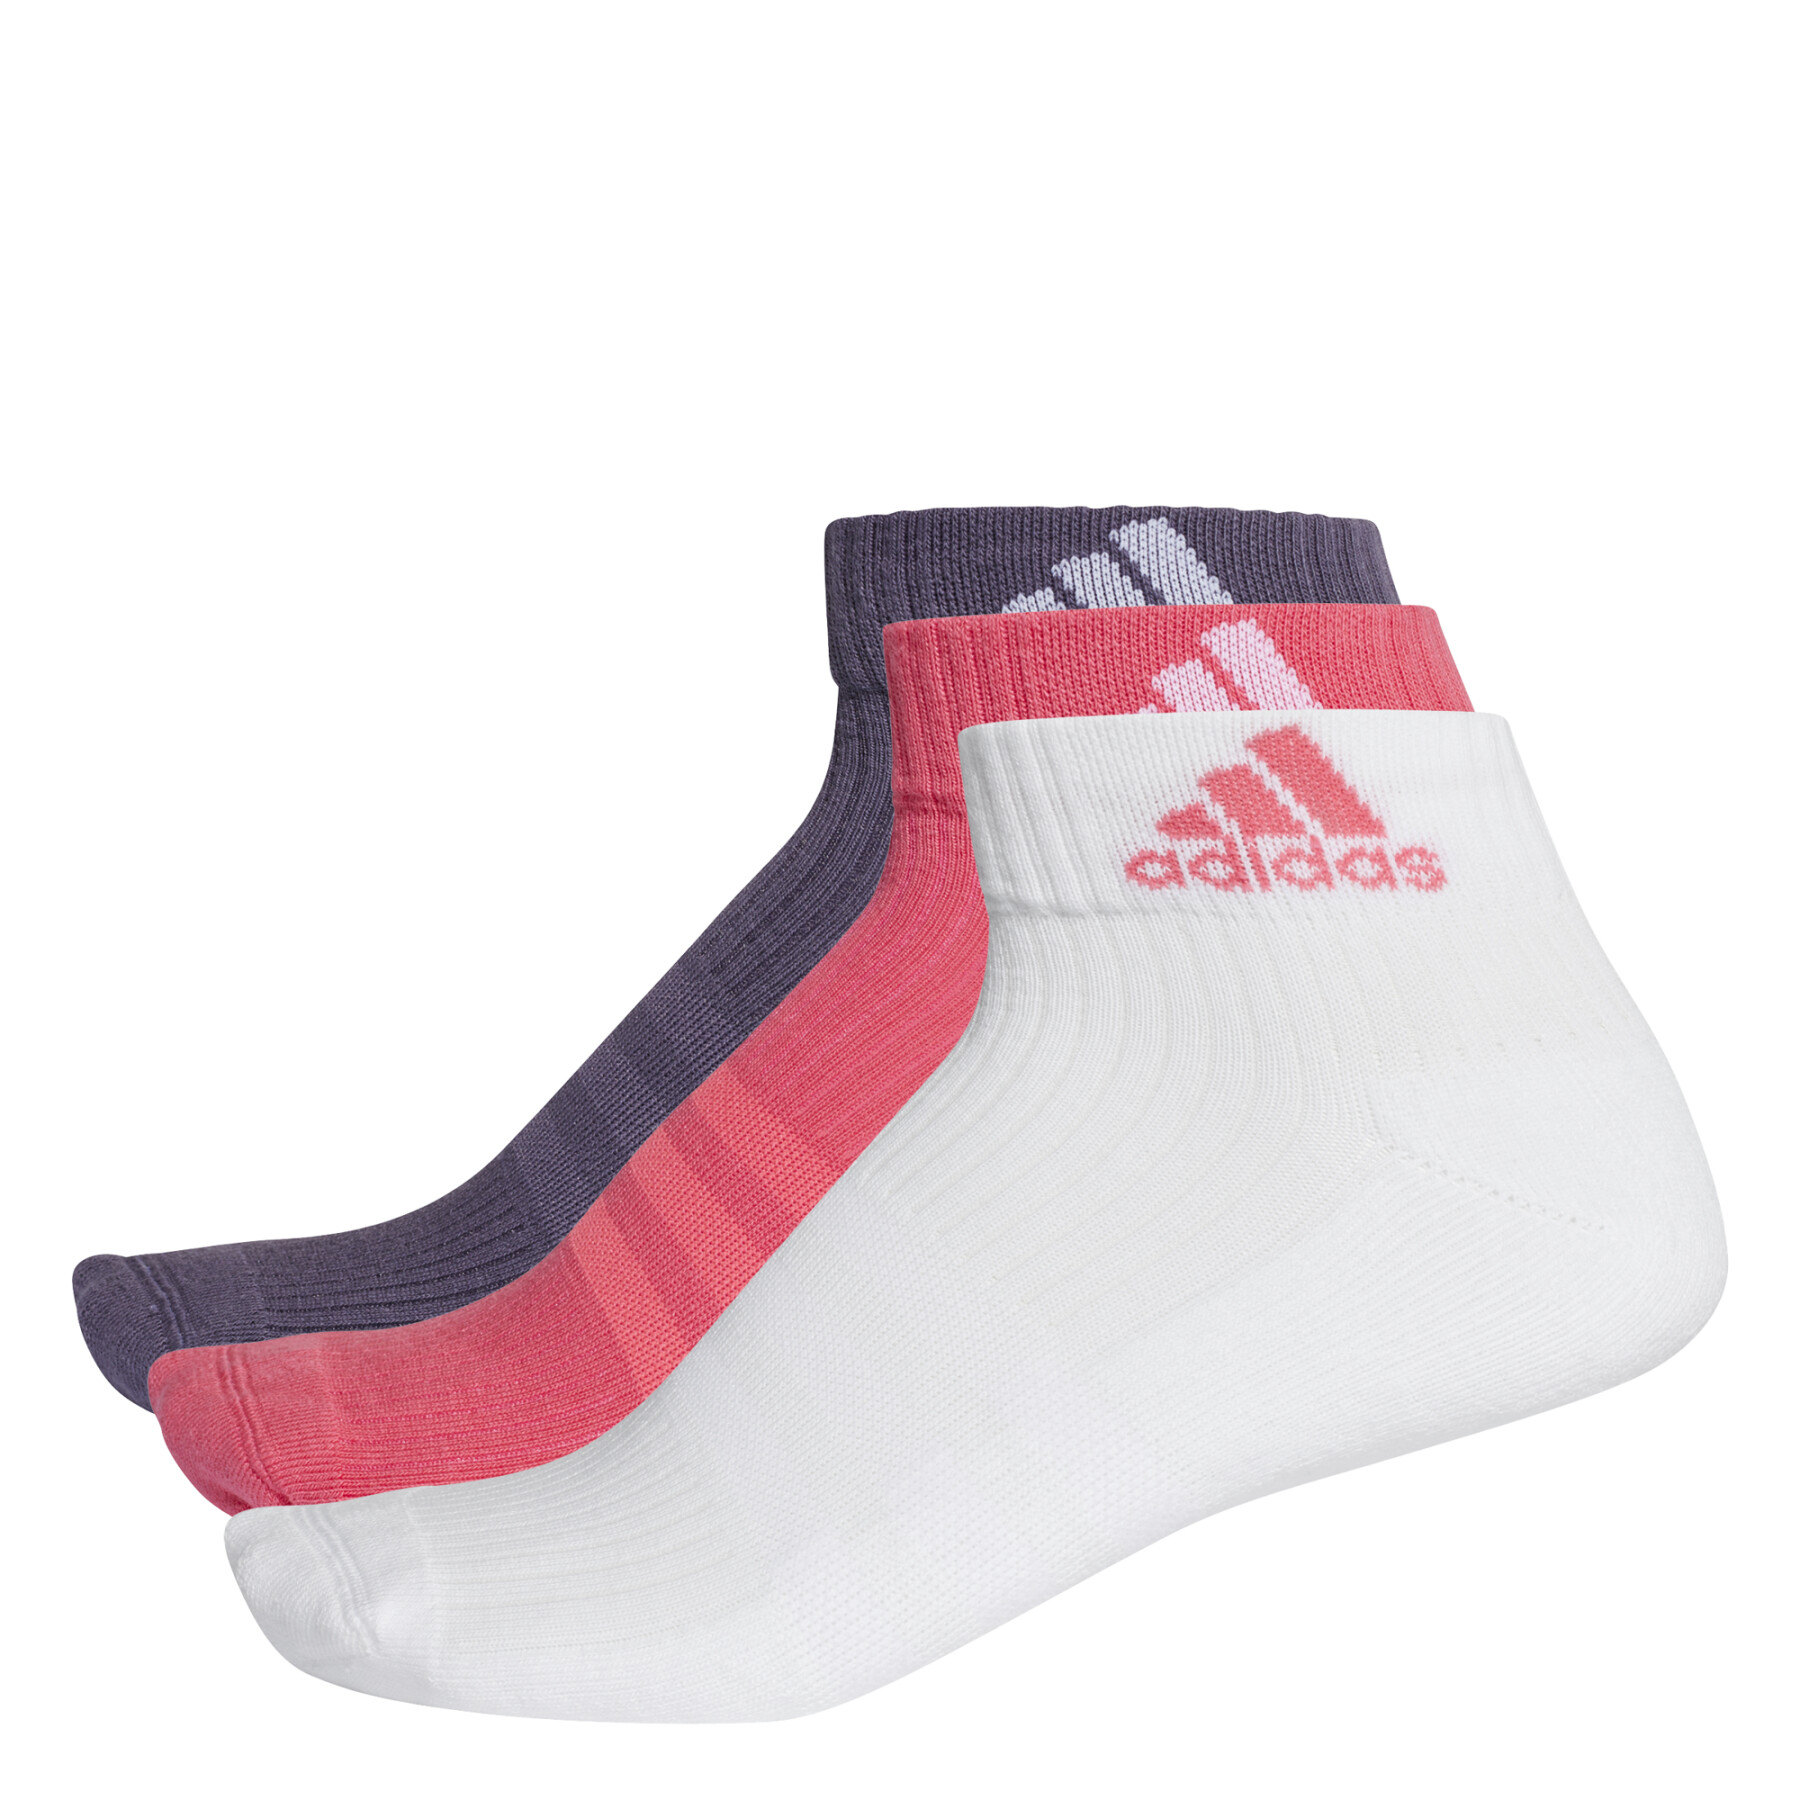 Söckchen adidas 3-Stripes Performance (3 paires)